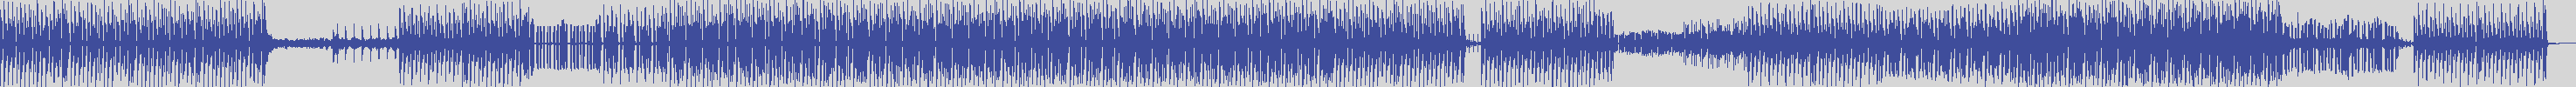 atomic_recordings [AR019] MBG - Trance Wave One [Alkemy Warp Mix] audio wave form